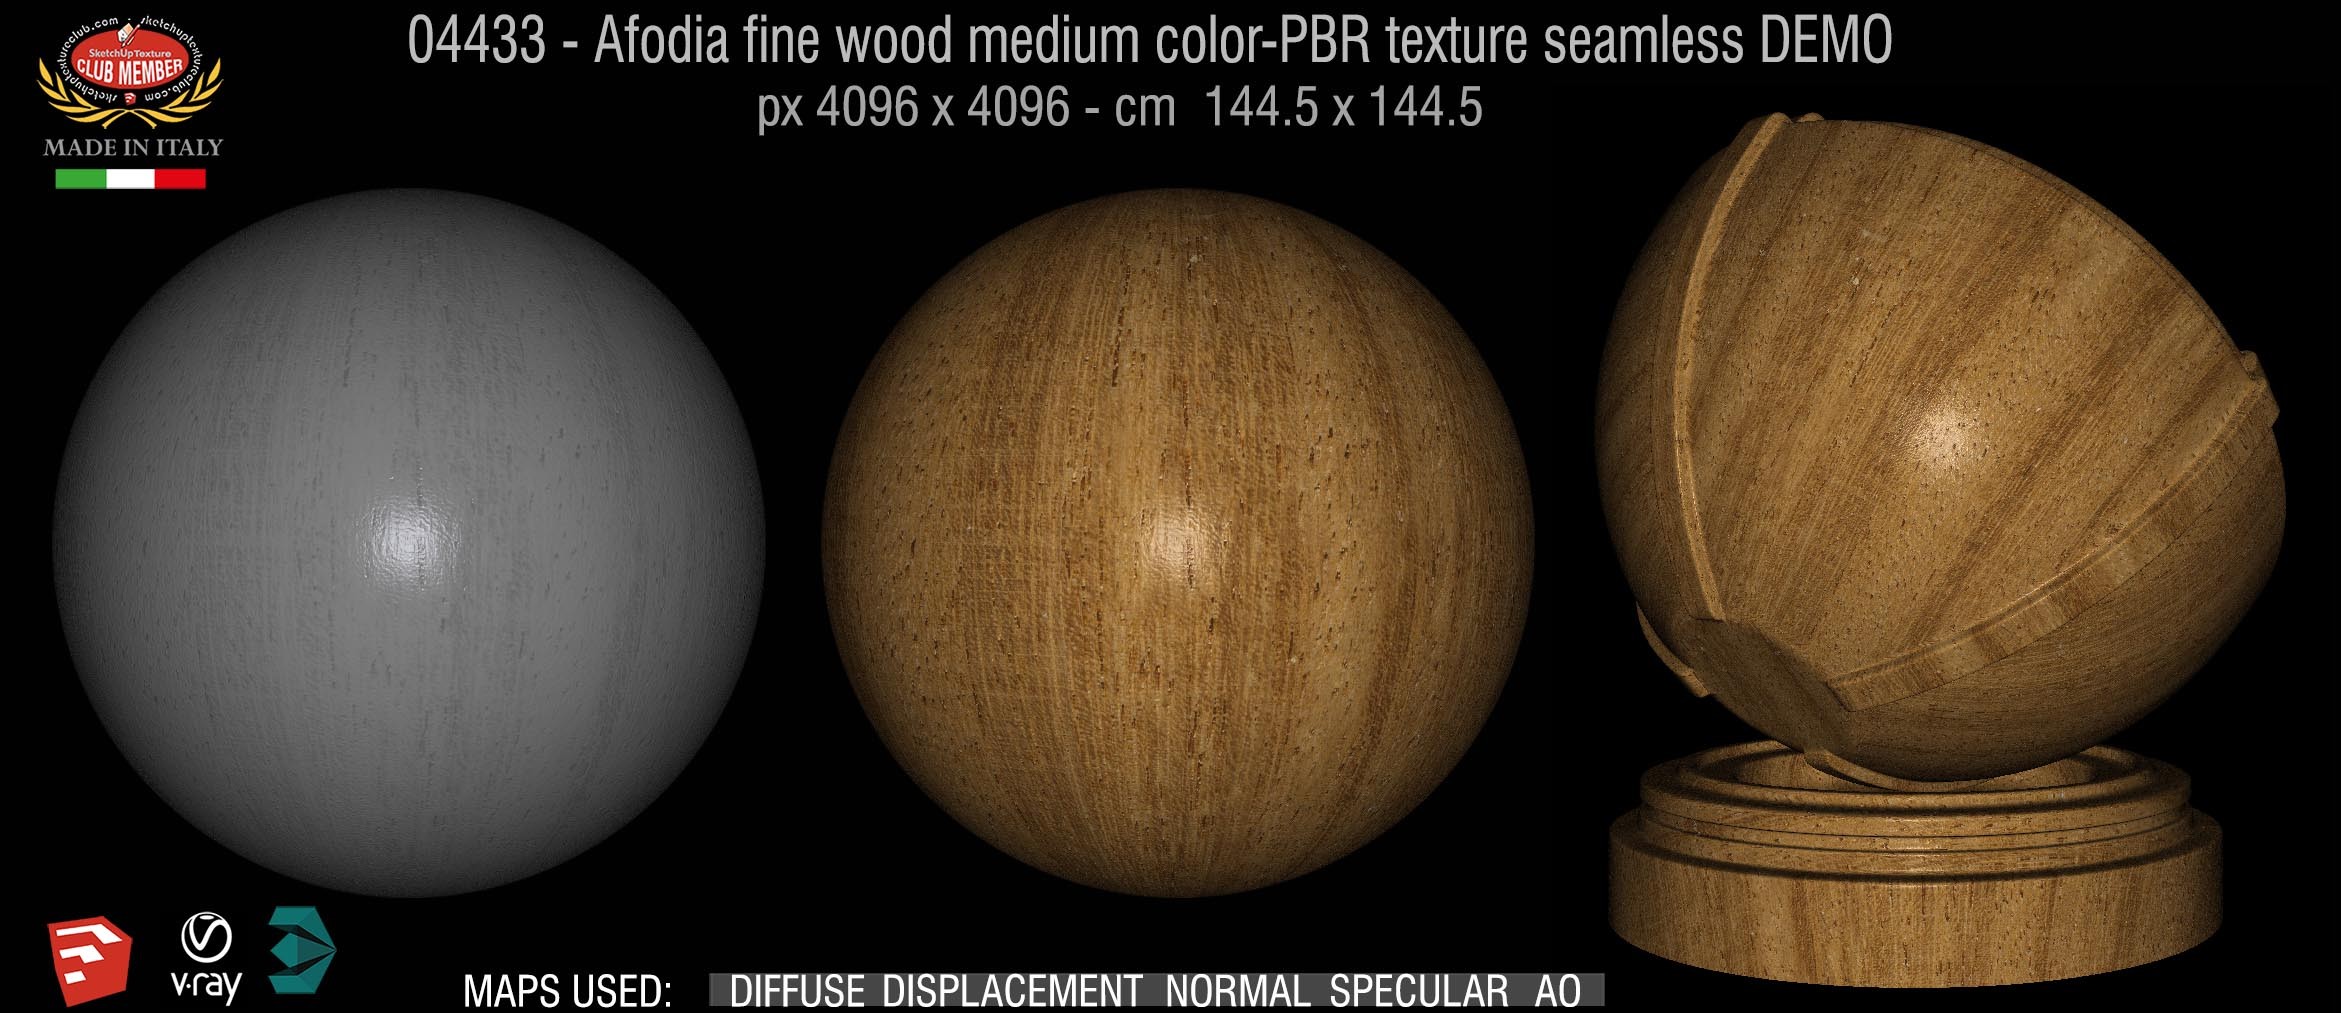 04433 Afodia fine wood medium color-PBR texture seamless DEMO